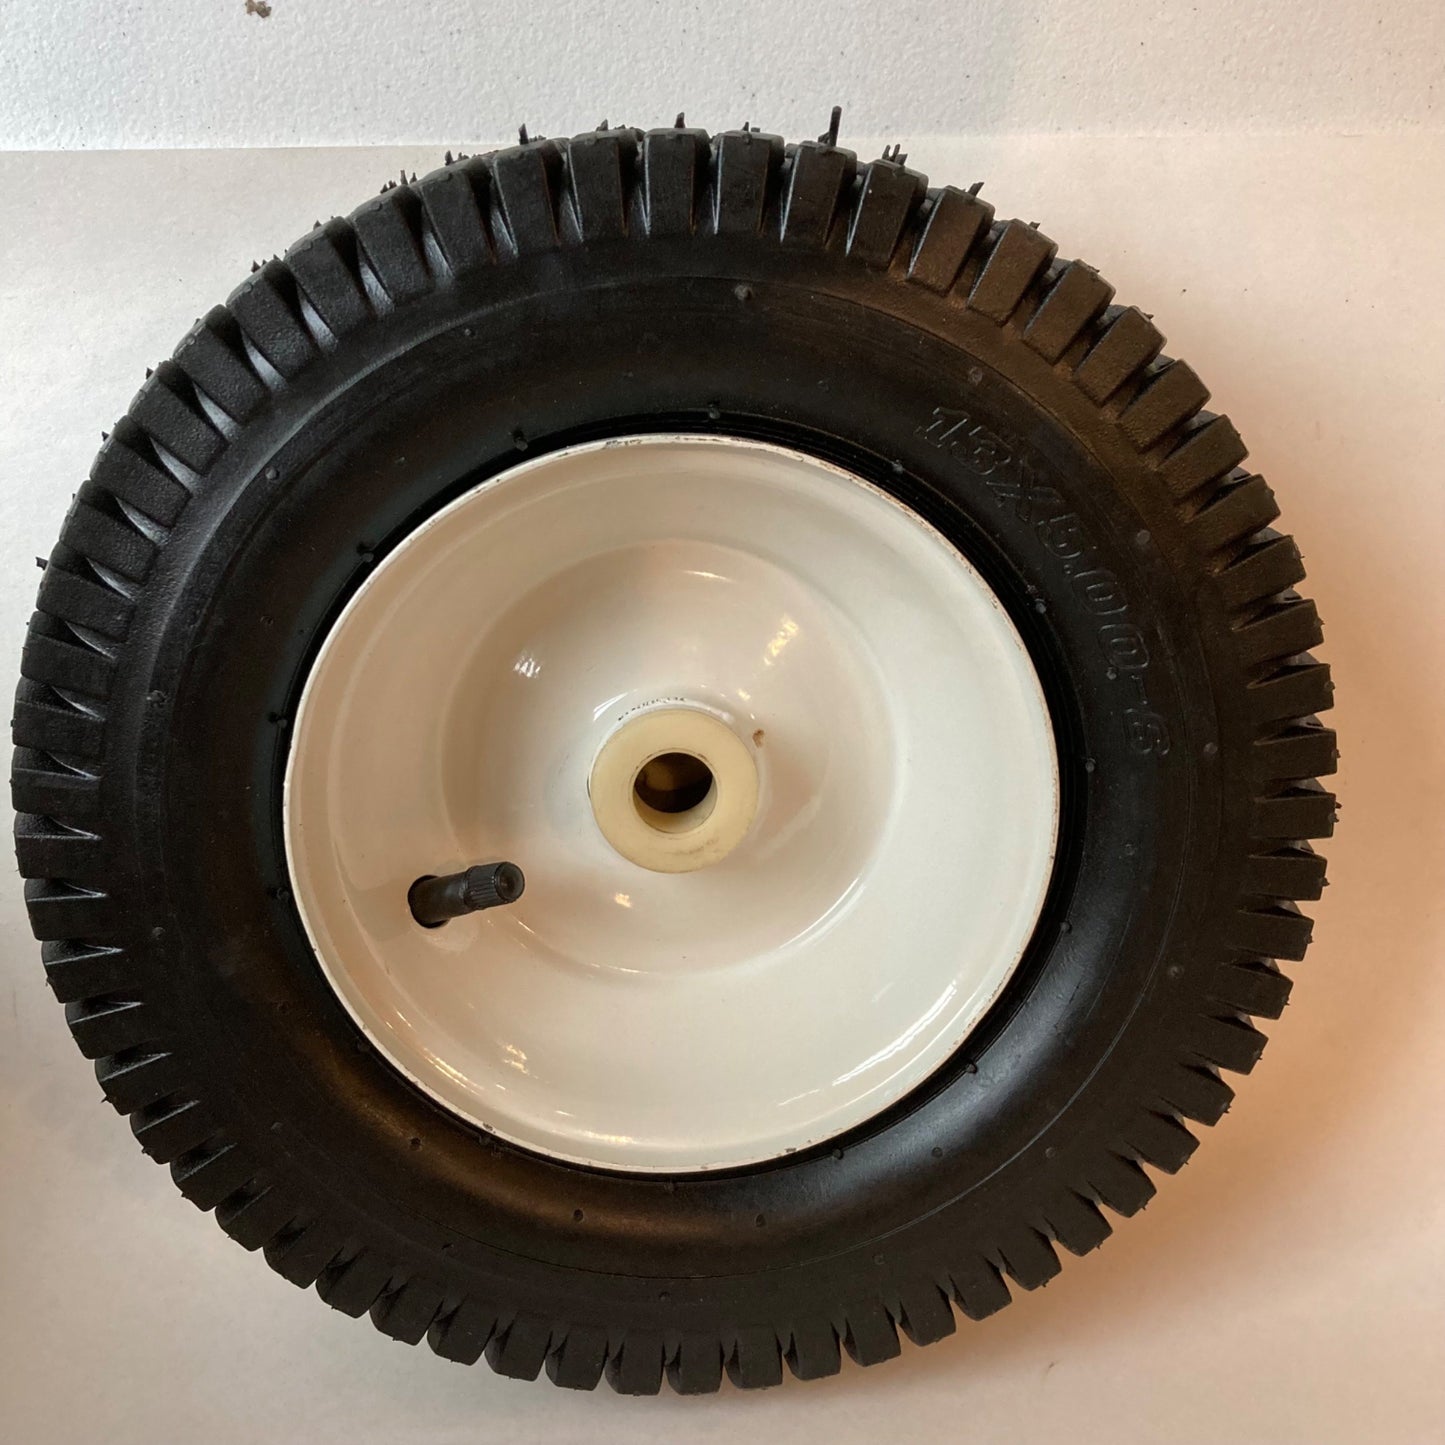 13x5.00-6 Lawn/Garden Wheel & Tire Zero Turn Mower Tractor NEW